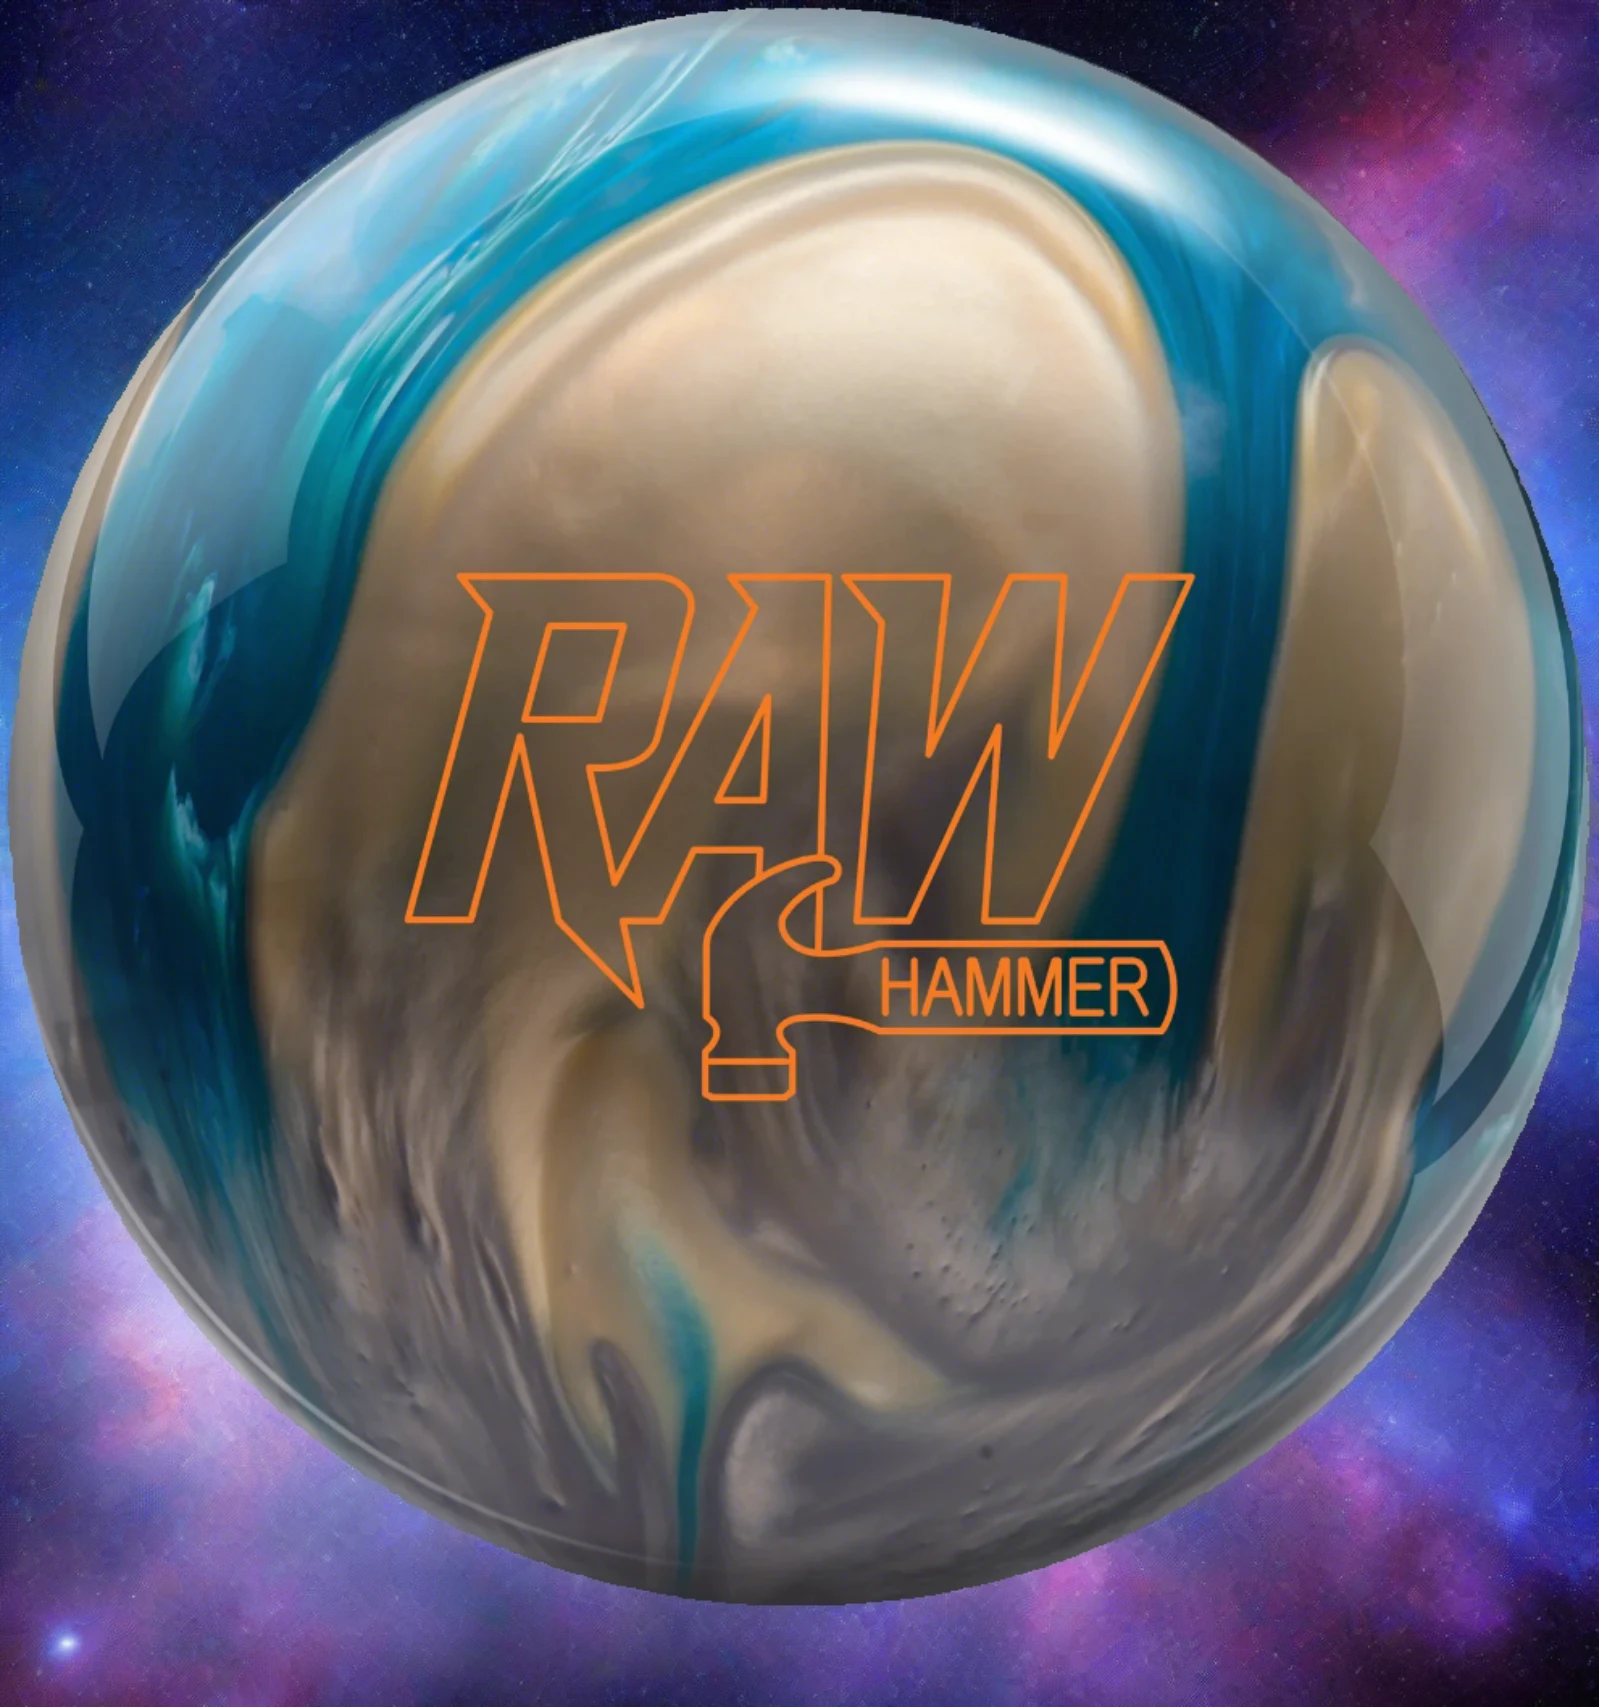 Hammer "Raw" Series